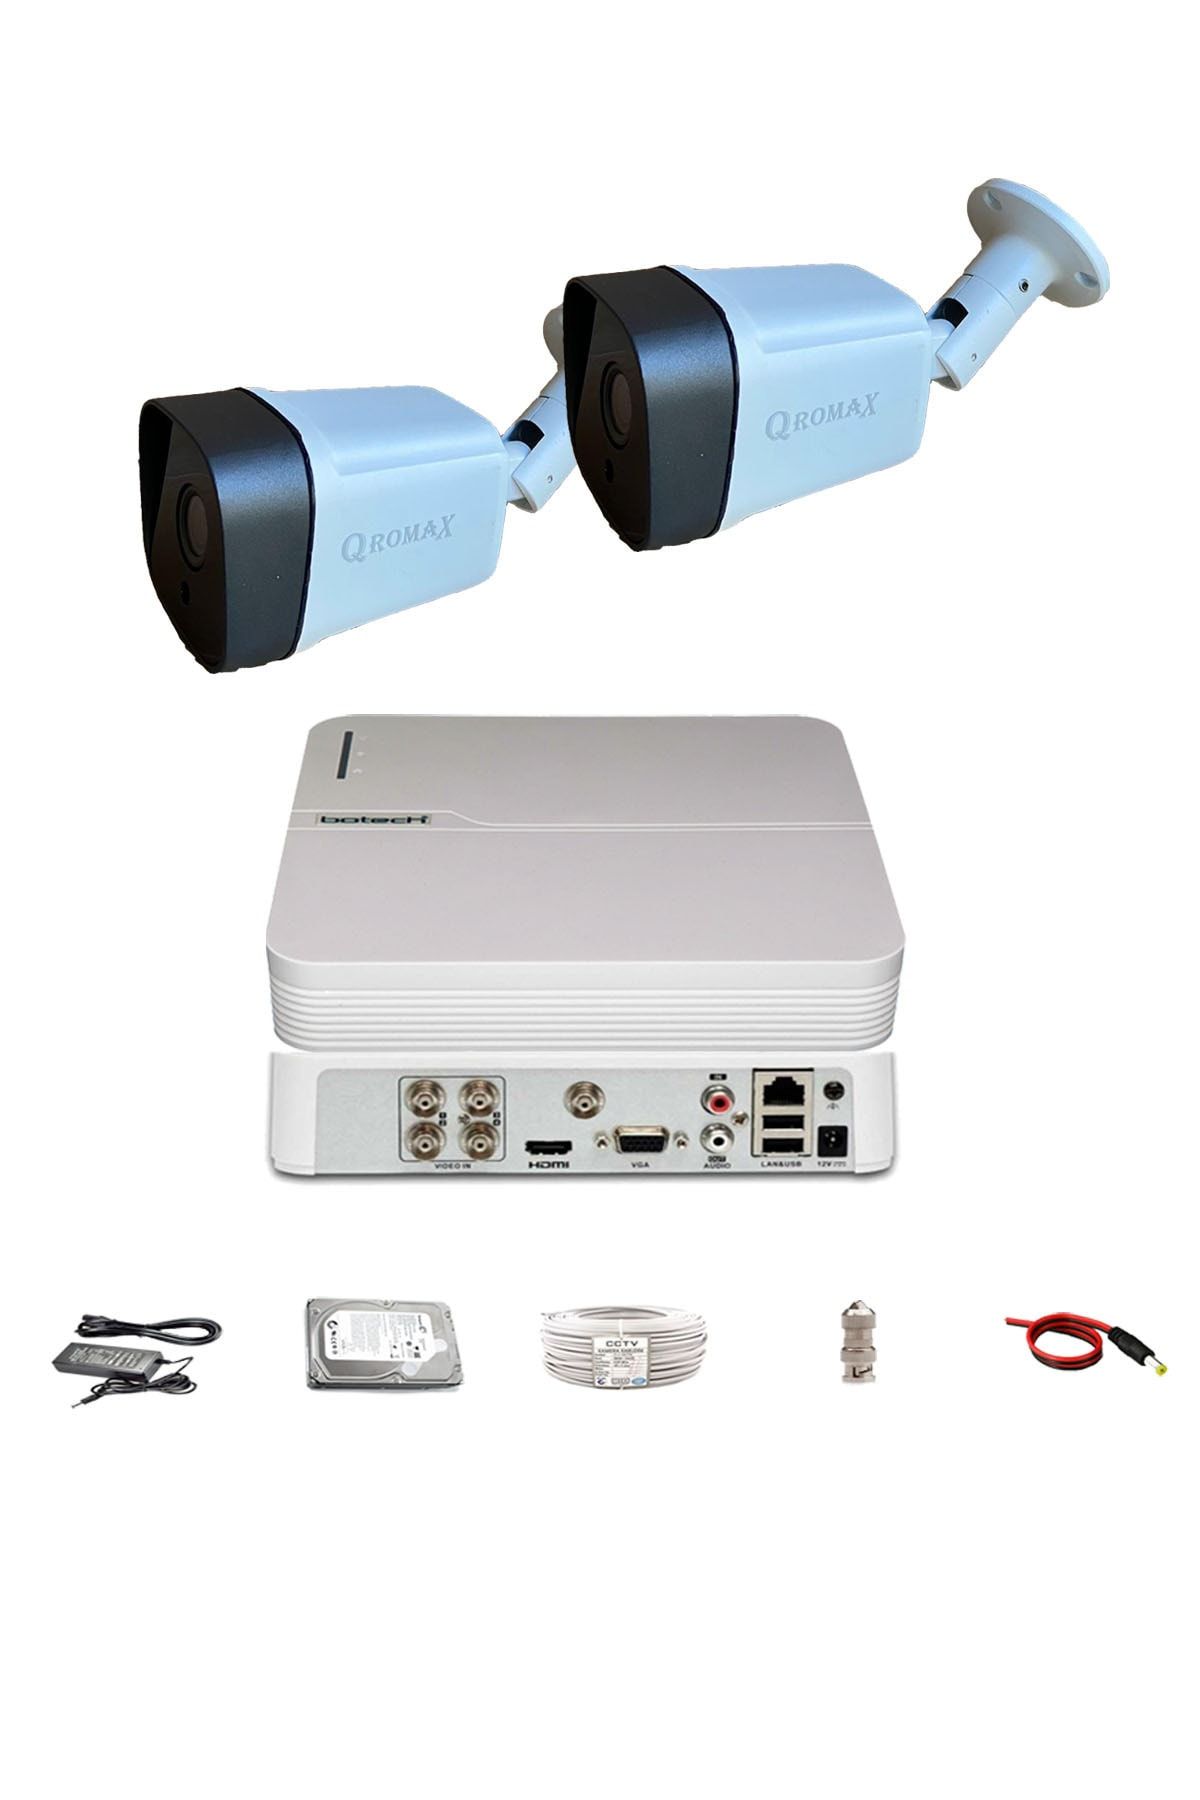 qromax Pro 5236 2 'li 5 Megapiksel Sony Lens 1080p Sensör Metal Kasa Güvenlik Kamerası Seti